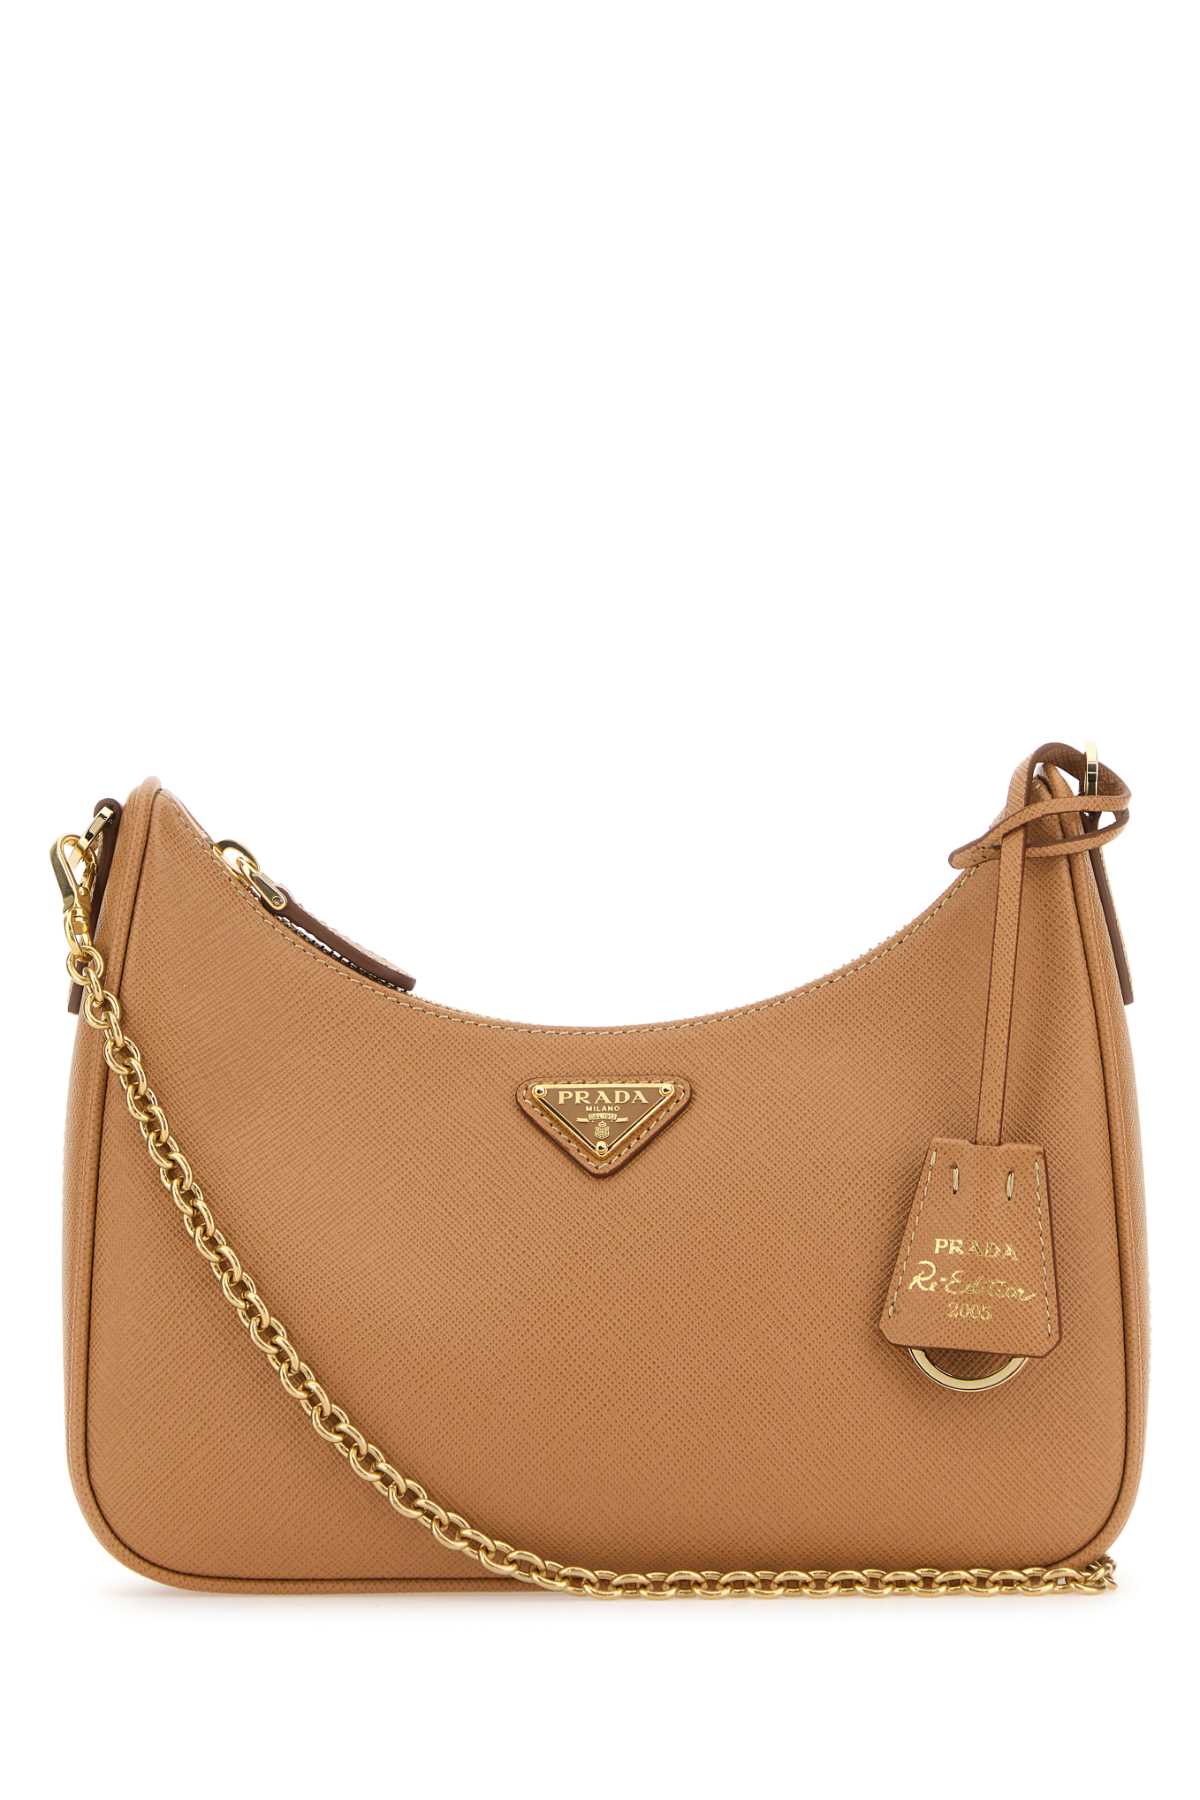 Prada Camel Leather Re-edition 2005 Handbag In Brown